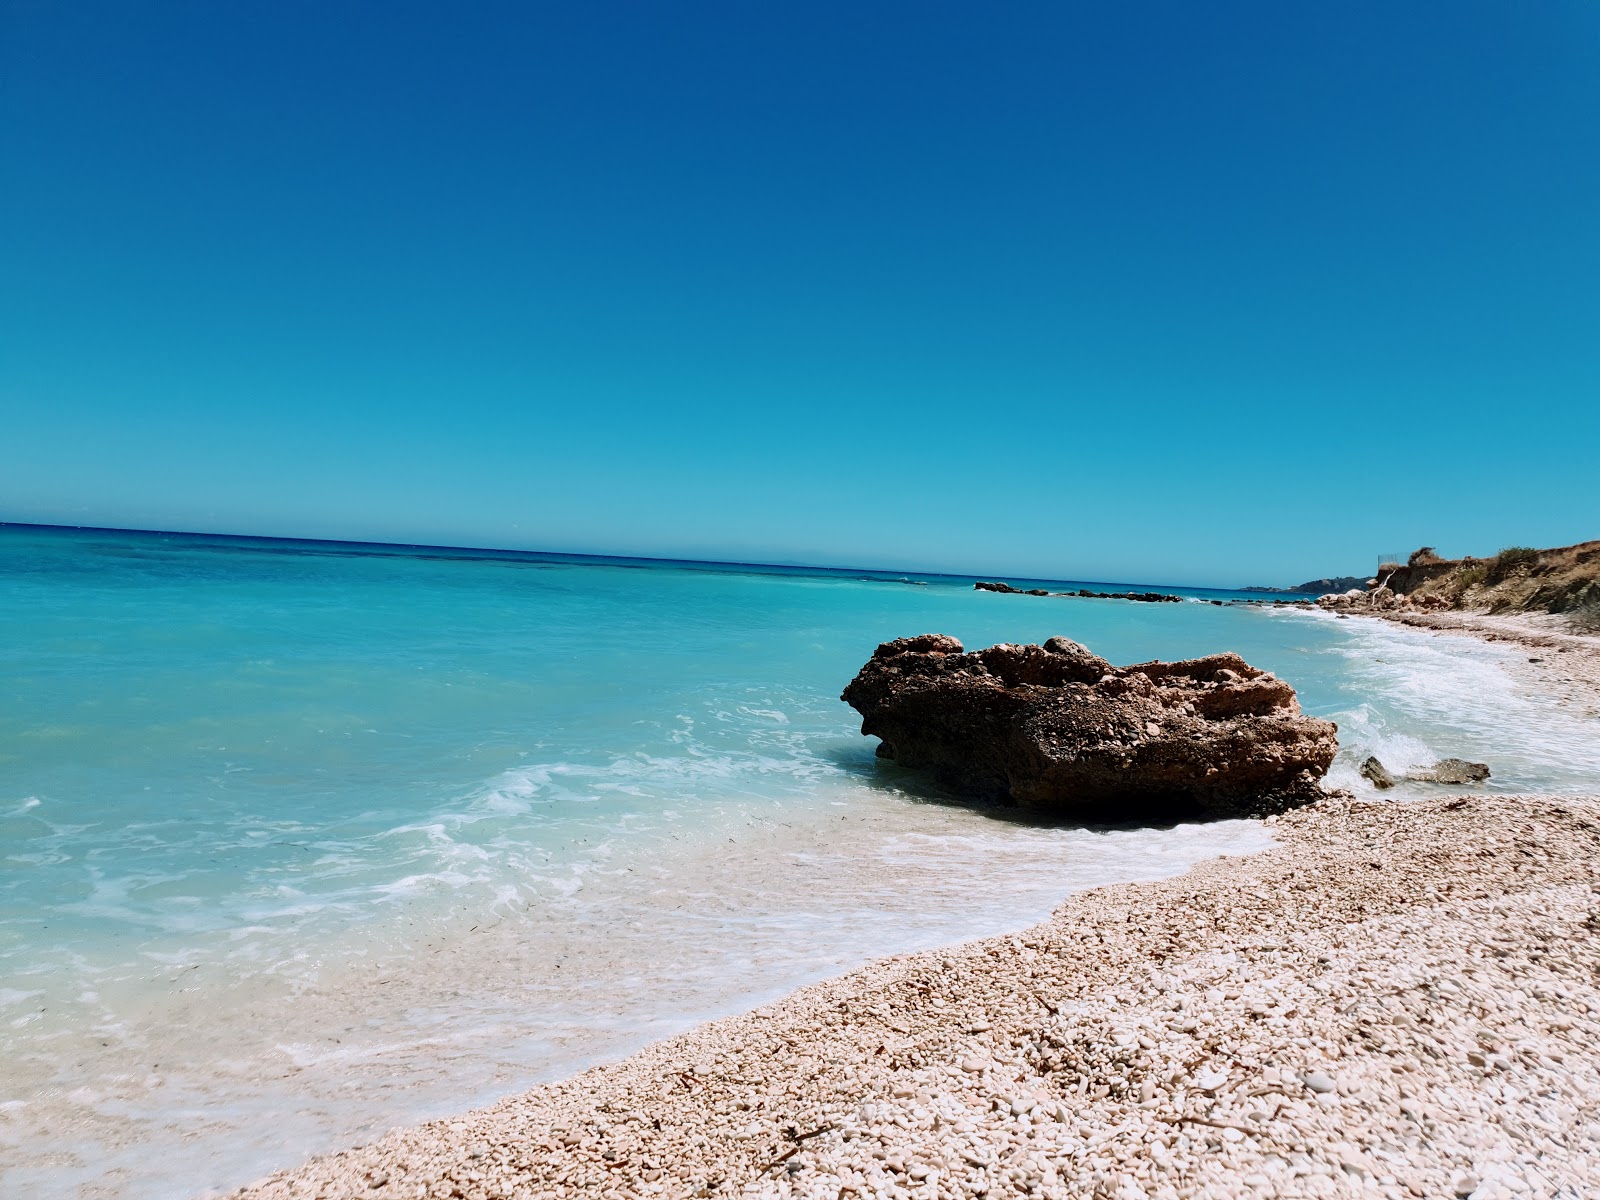 Foto de Laperda Beach - lugar popular entre os apreciadores de relaxamento